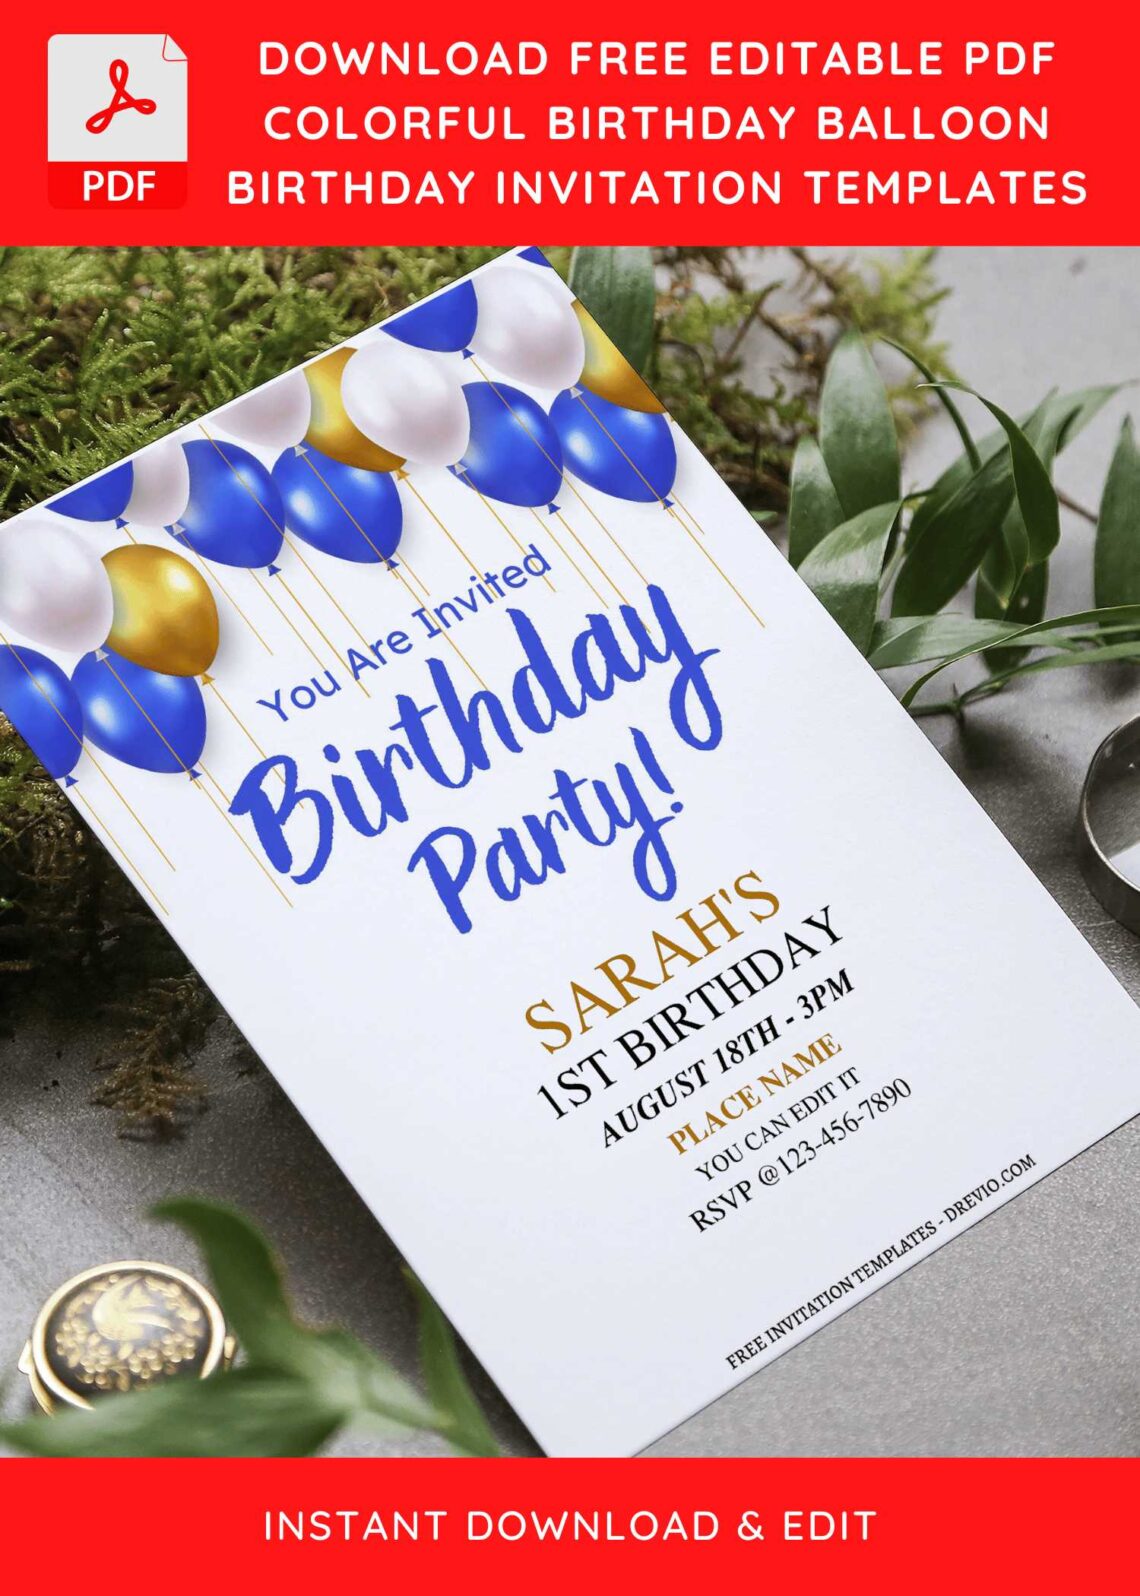 (Free Editable PDF) Joyful Birthday Party Invitation Templates F